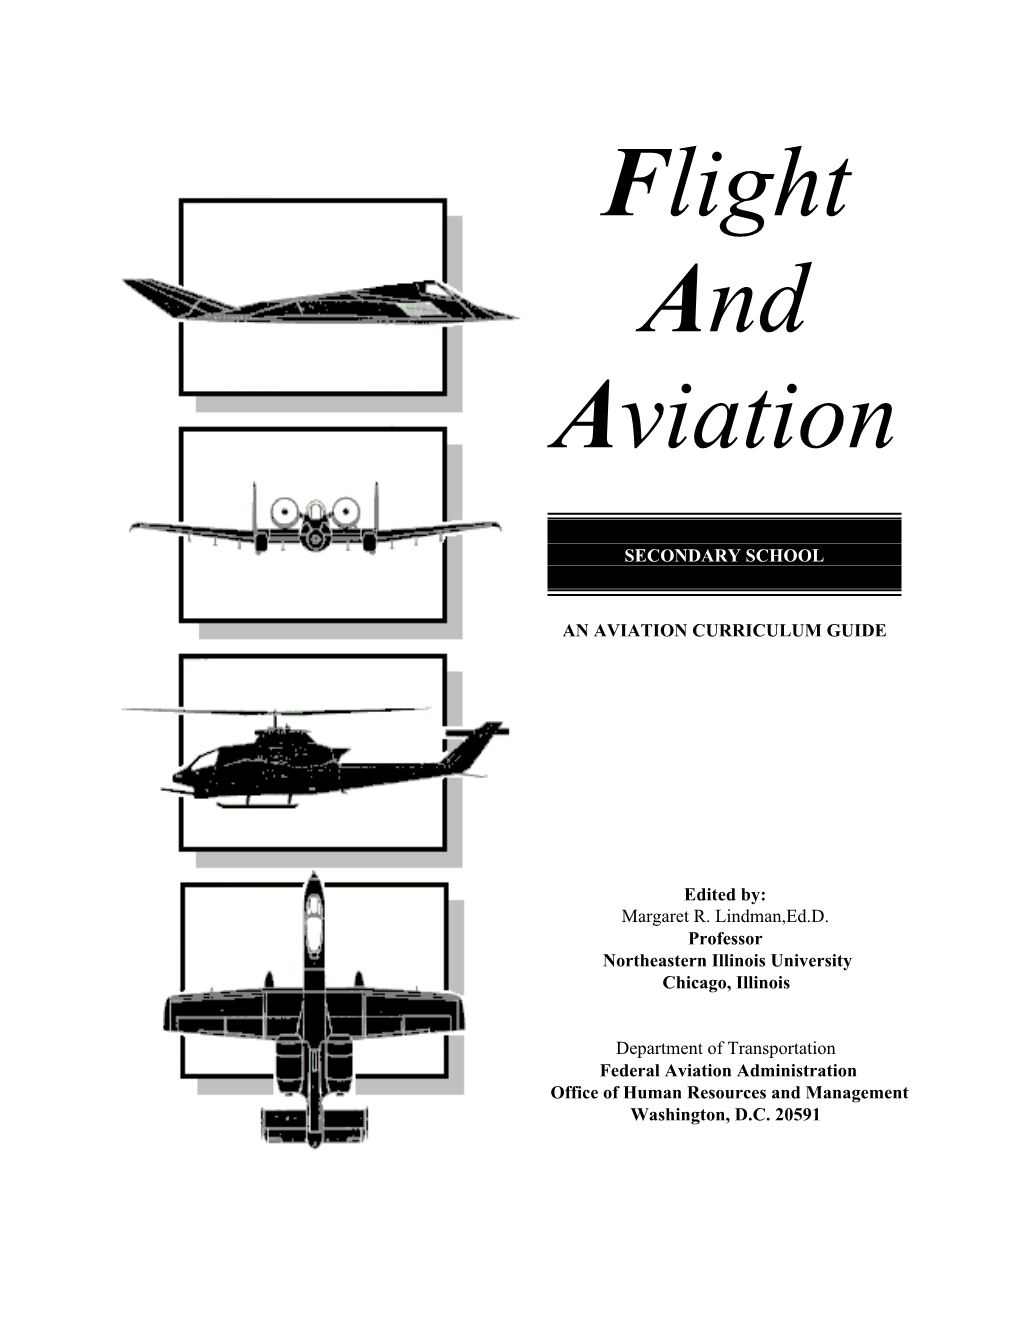 Flight and Aviation, Secondary School – an Aviation Curriculum Guide